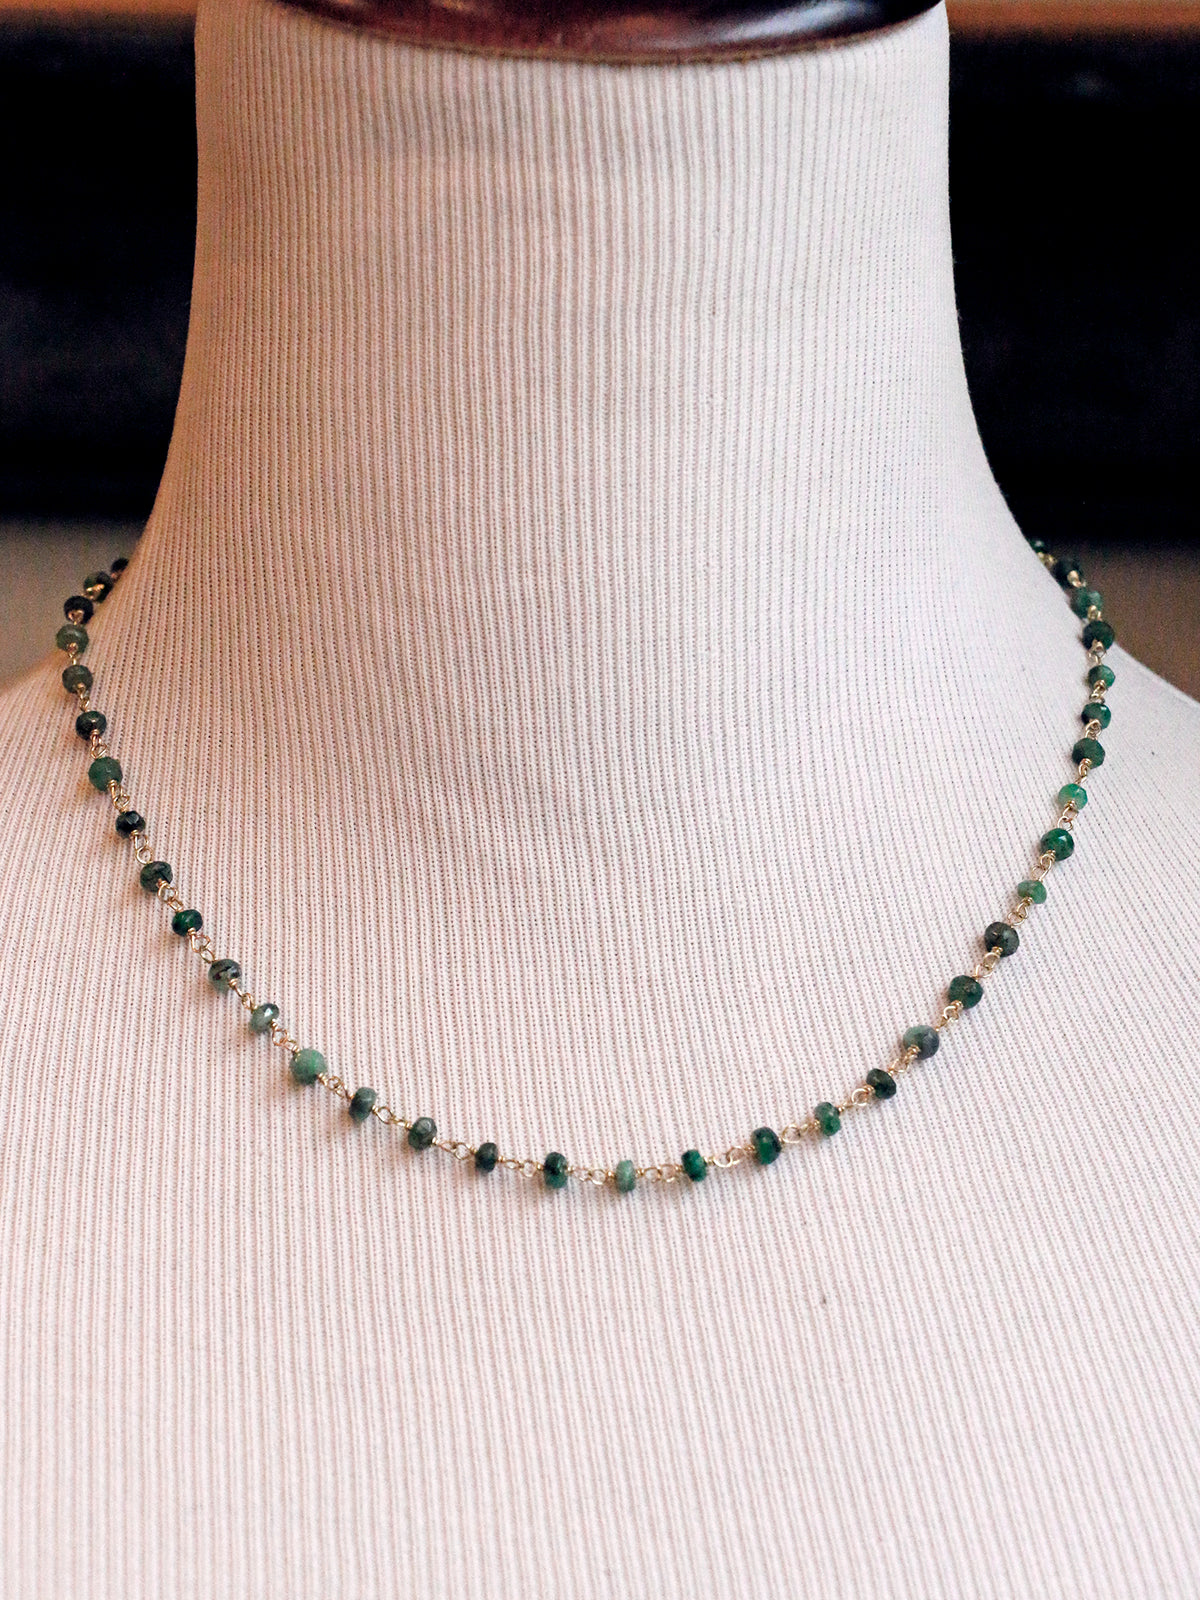 Susan Rifkin Beaded Emerald Necklace